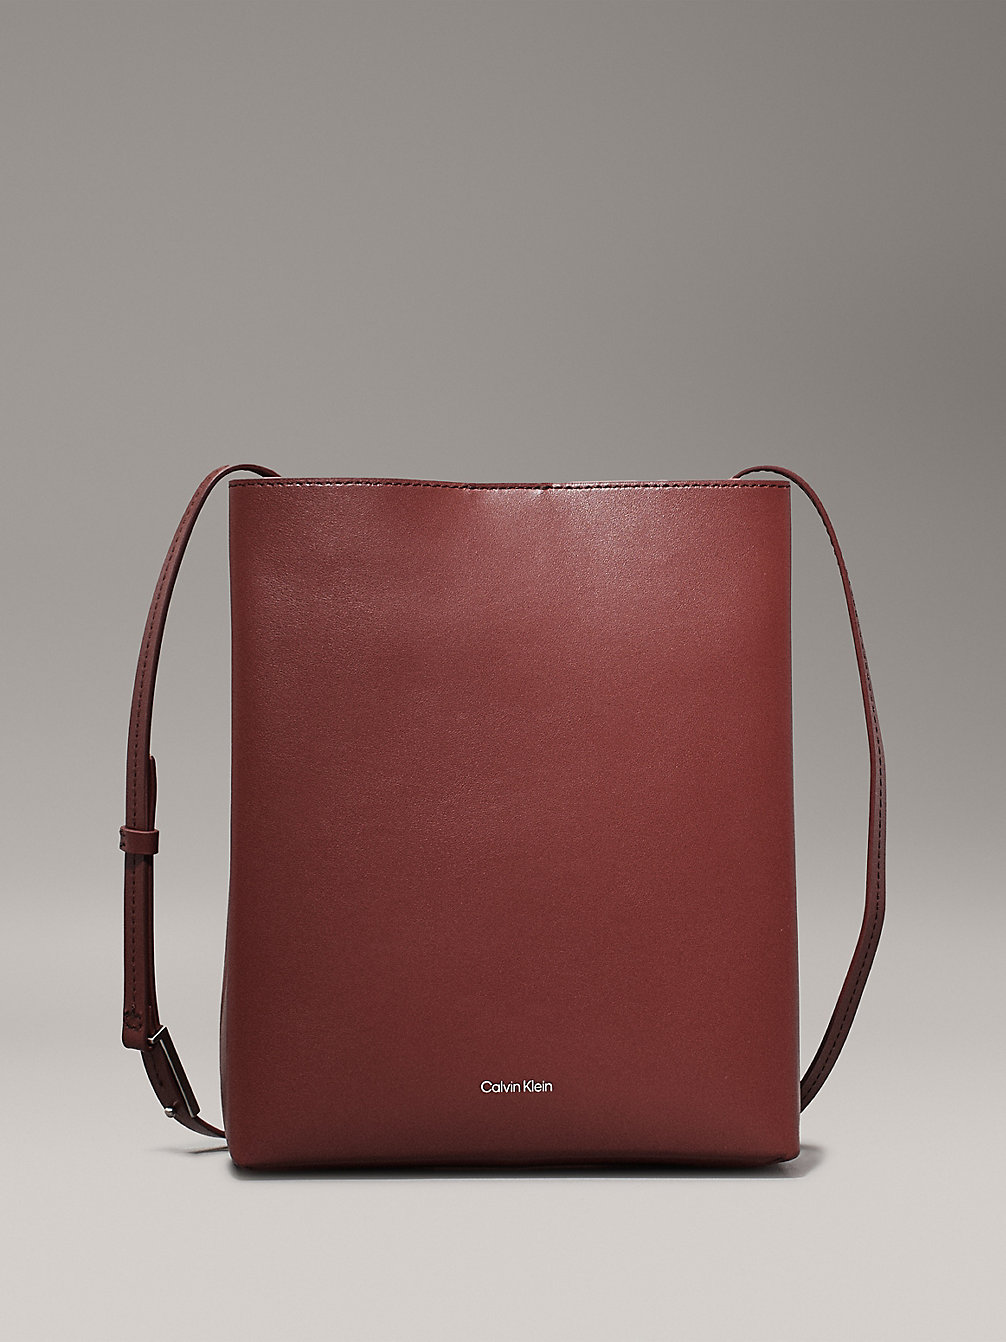 MAHOGANY Leather Crossbody Bag undefined Women Calvin Klein